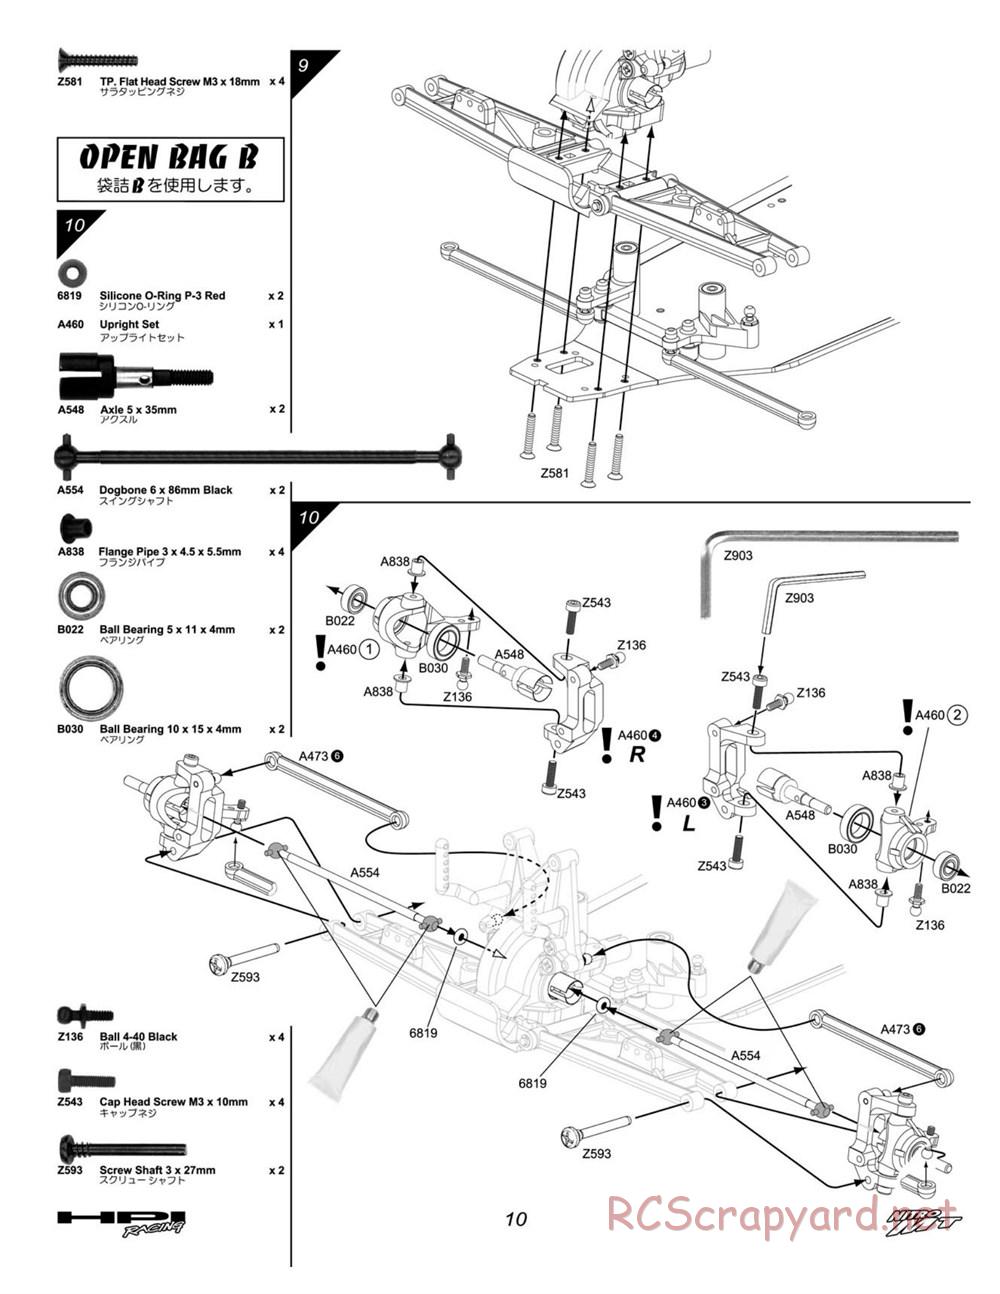 HPI - Nitro MT - Manual - Page 10